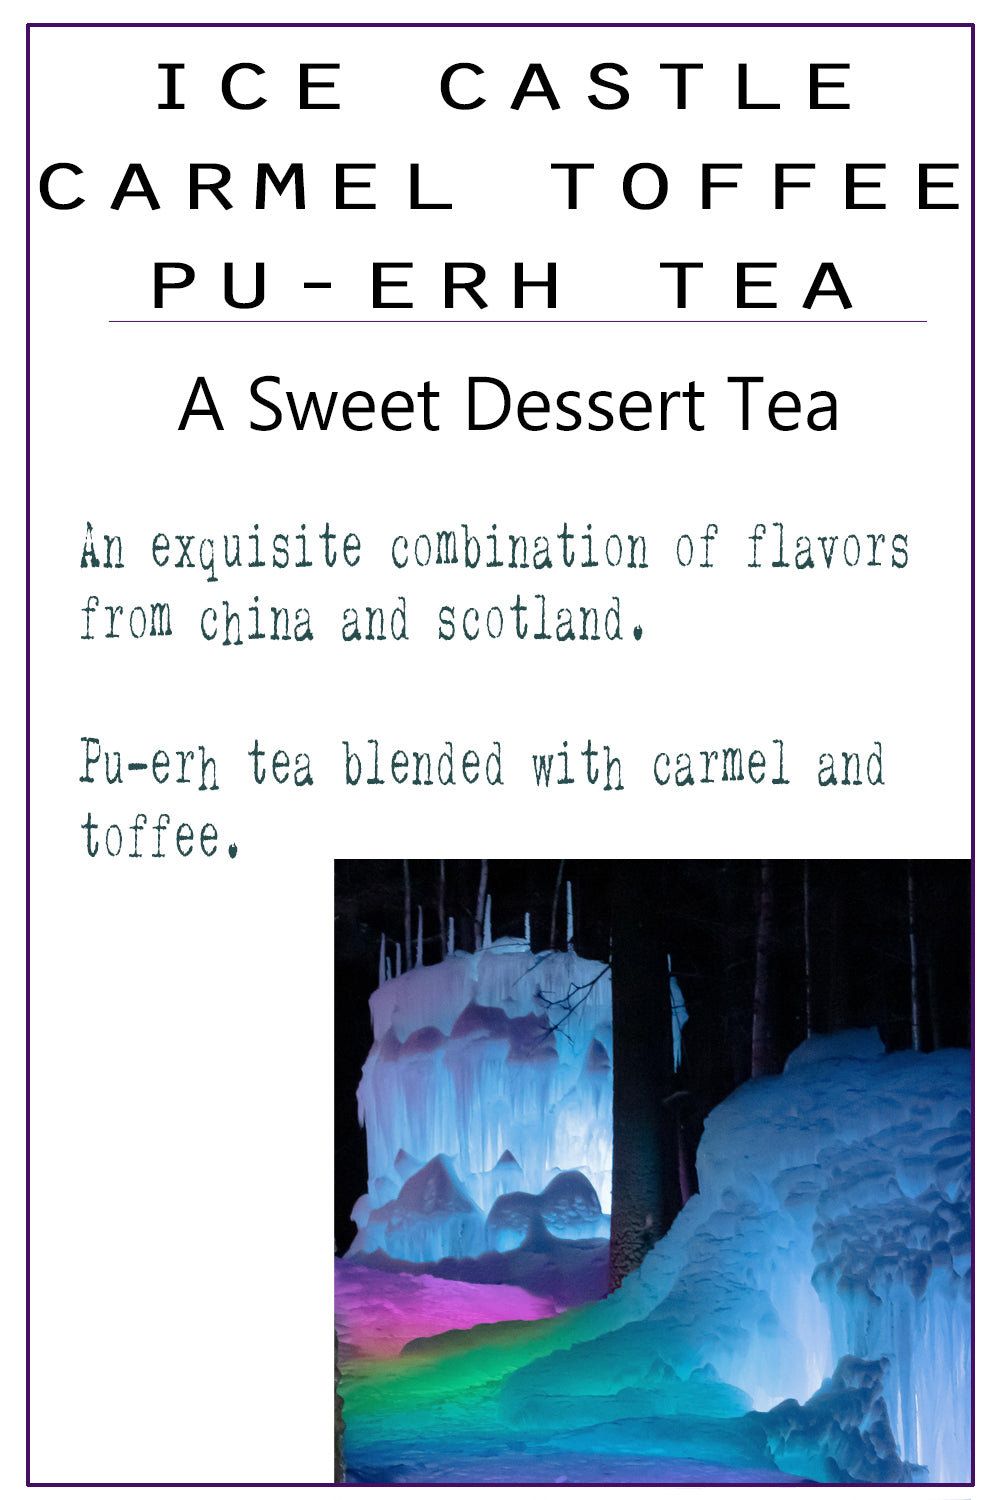 Ice Castle Carmel Toffee Tea | Scottish Carmel Toffee Pu-erh Tea | Sweet Dessert Tea BlendIce Castle Carmel Toffee Tea | Scottish Carmel Toffee Pu-erh Tea | Sweet Dessert Tea Blend